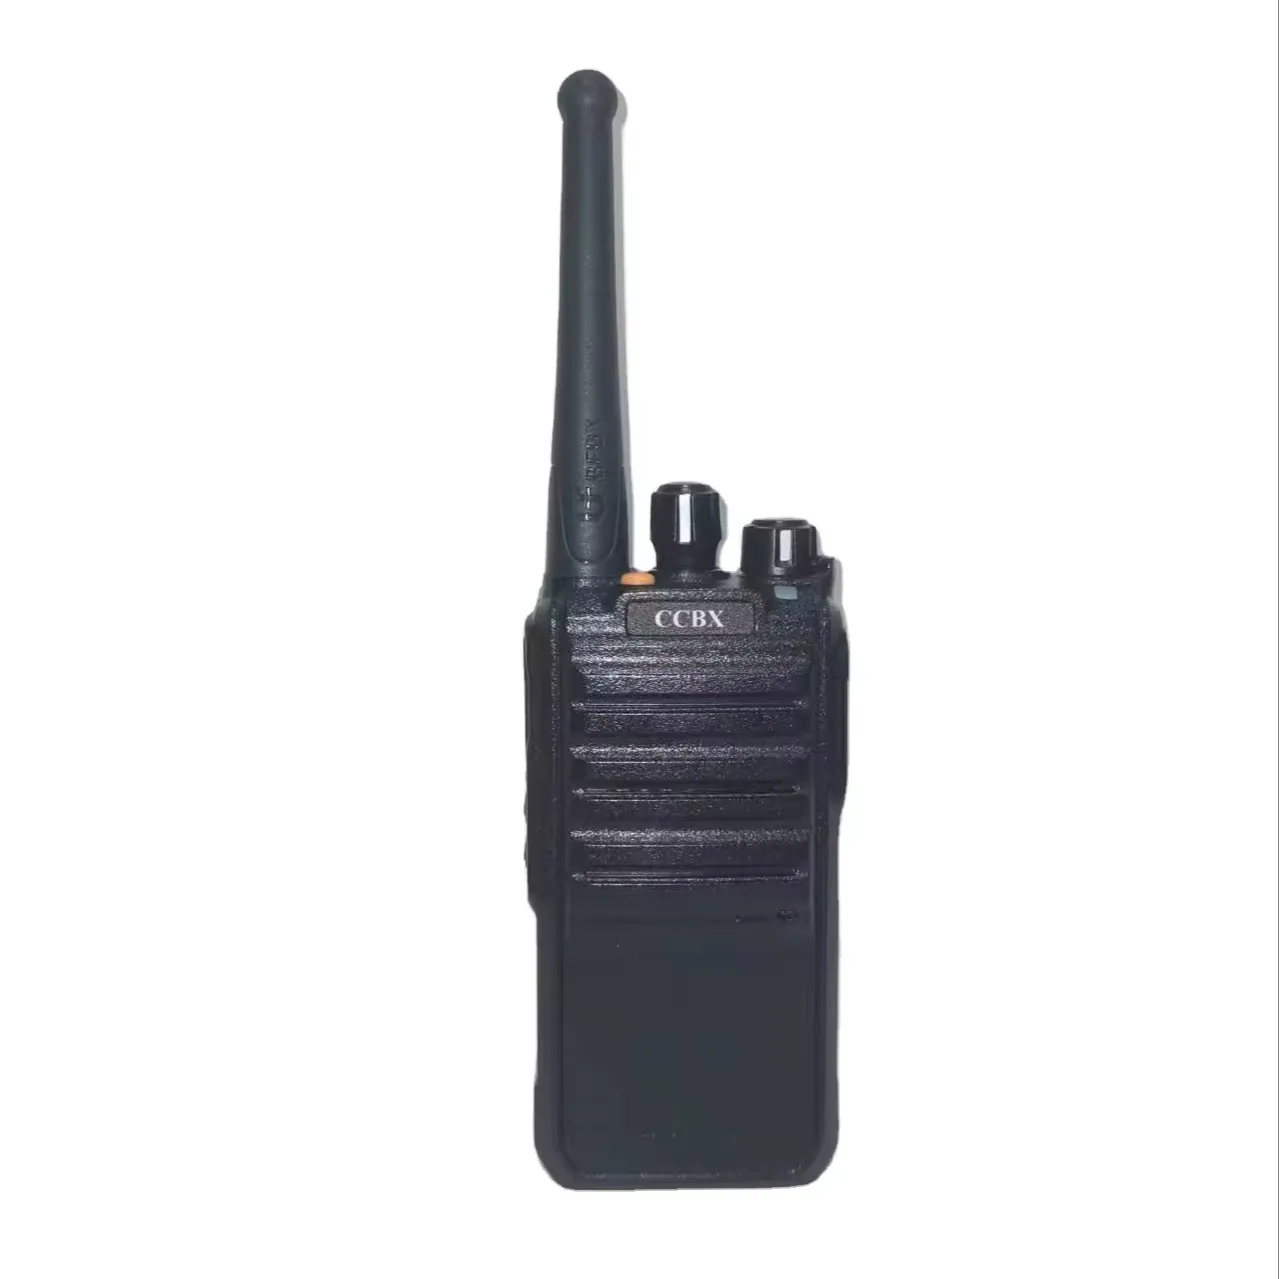 DMR walkie talkie clear sound digital mobile radio water proof dmr handheld & portable dmr for use in hotels,restaurants etc.